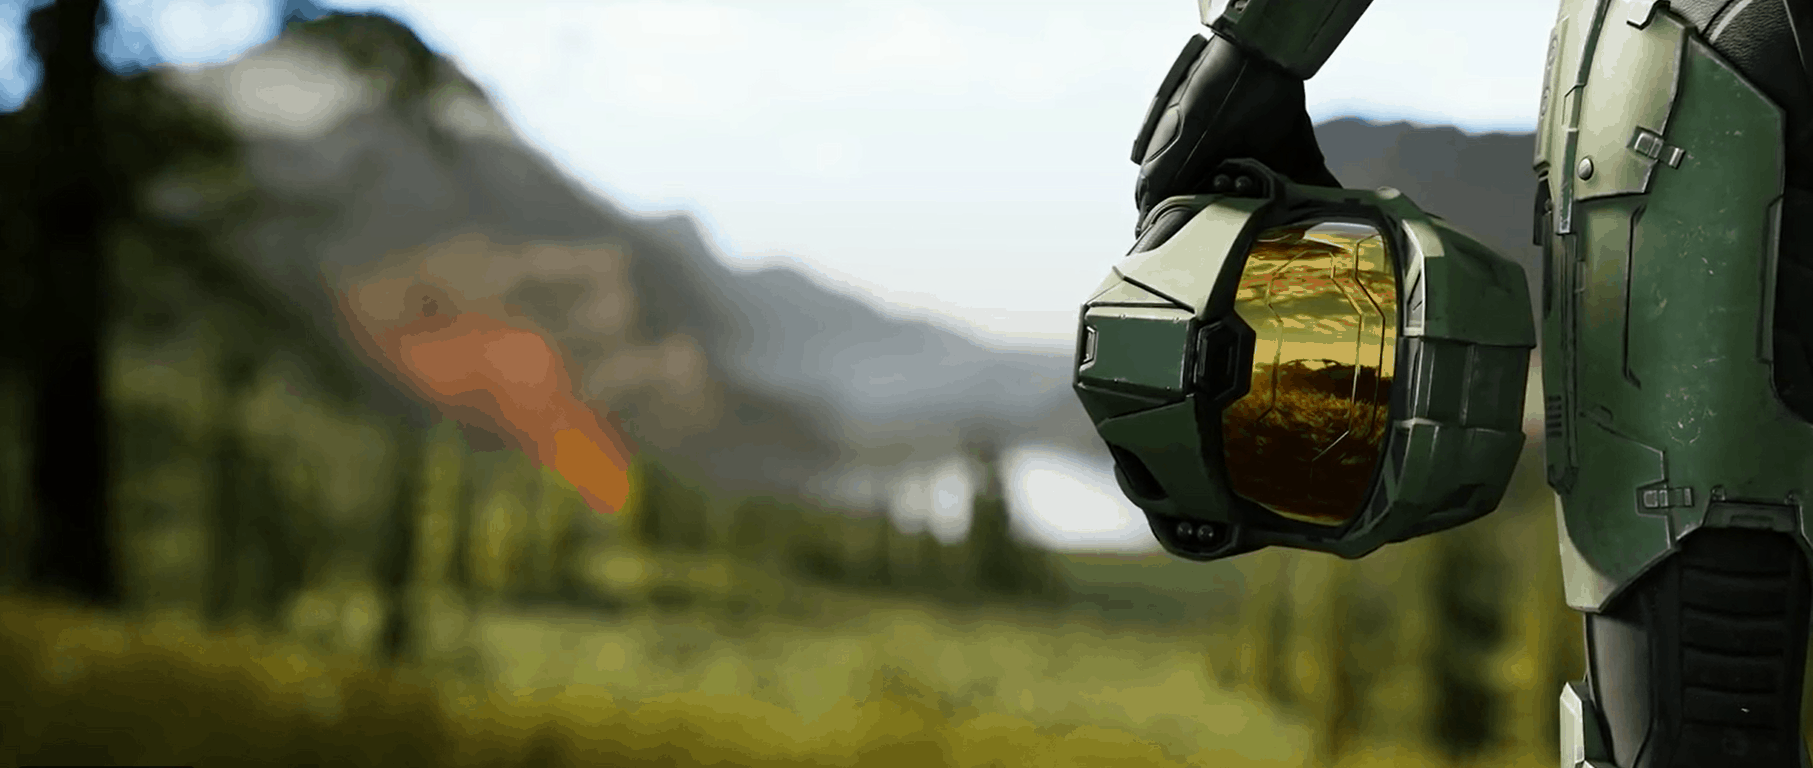 Halo Infinite Creative Director has left 343 Industries - OnMSFT.com - August 17, 2019